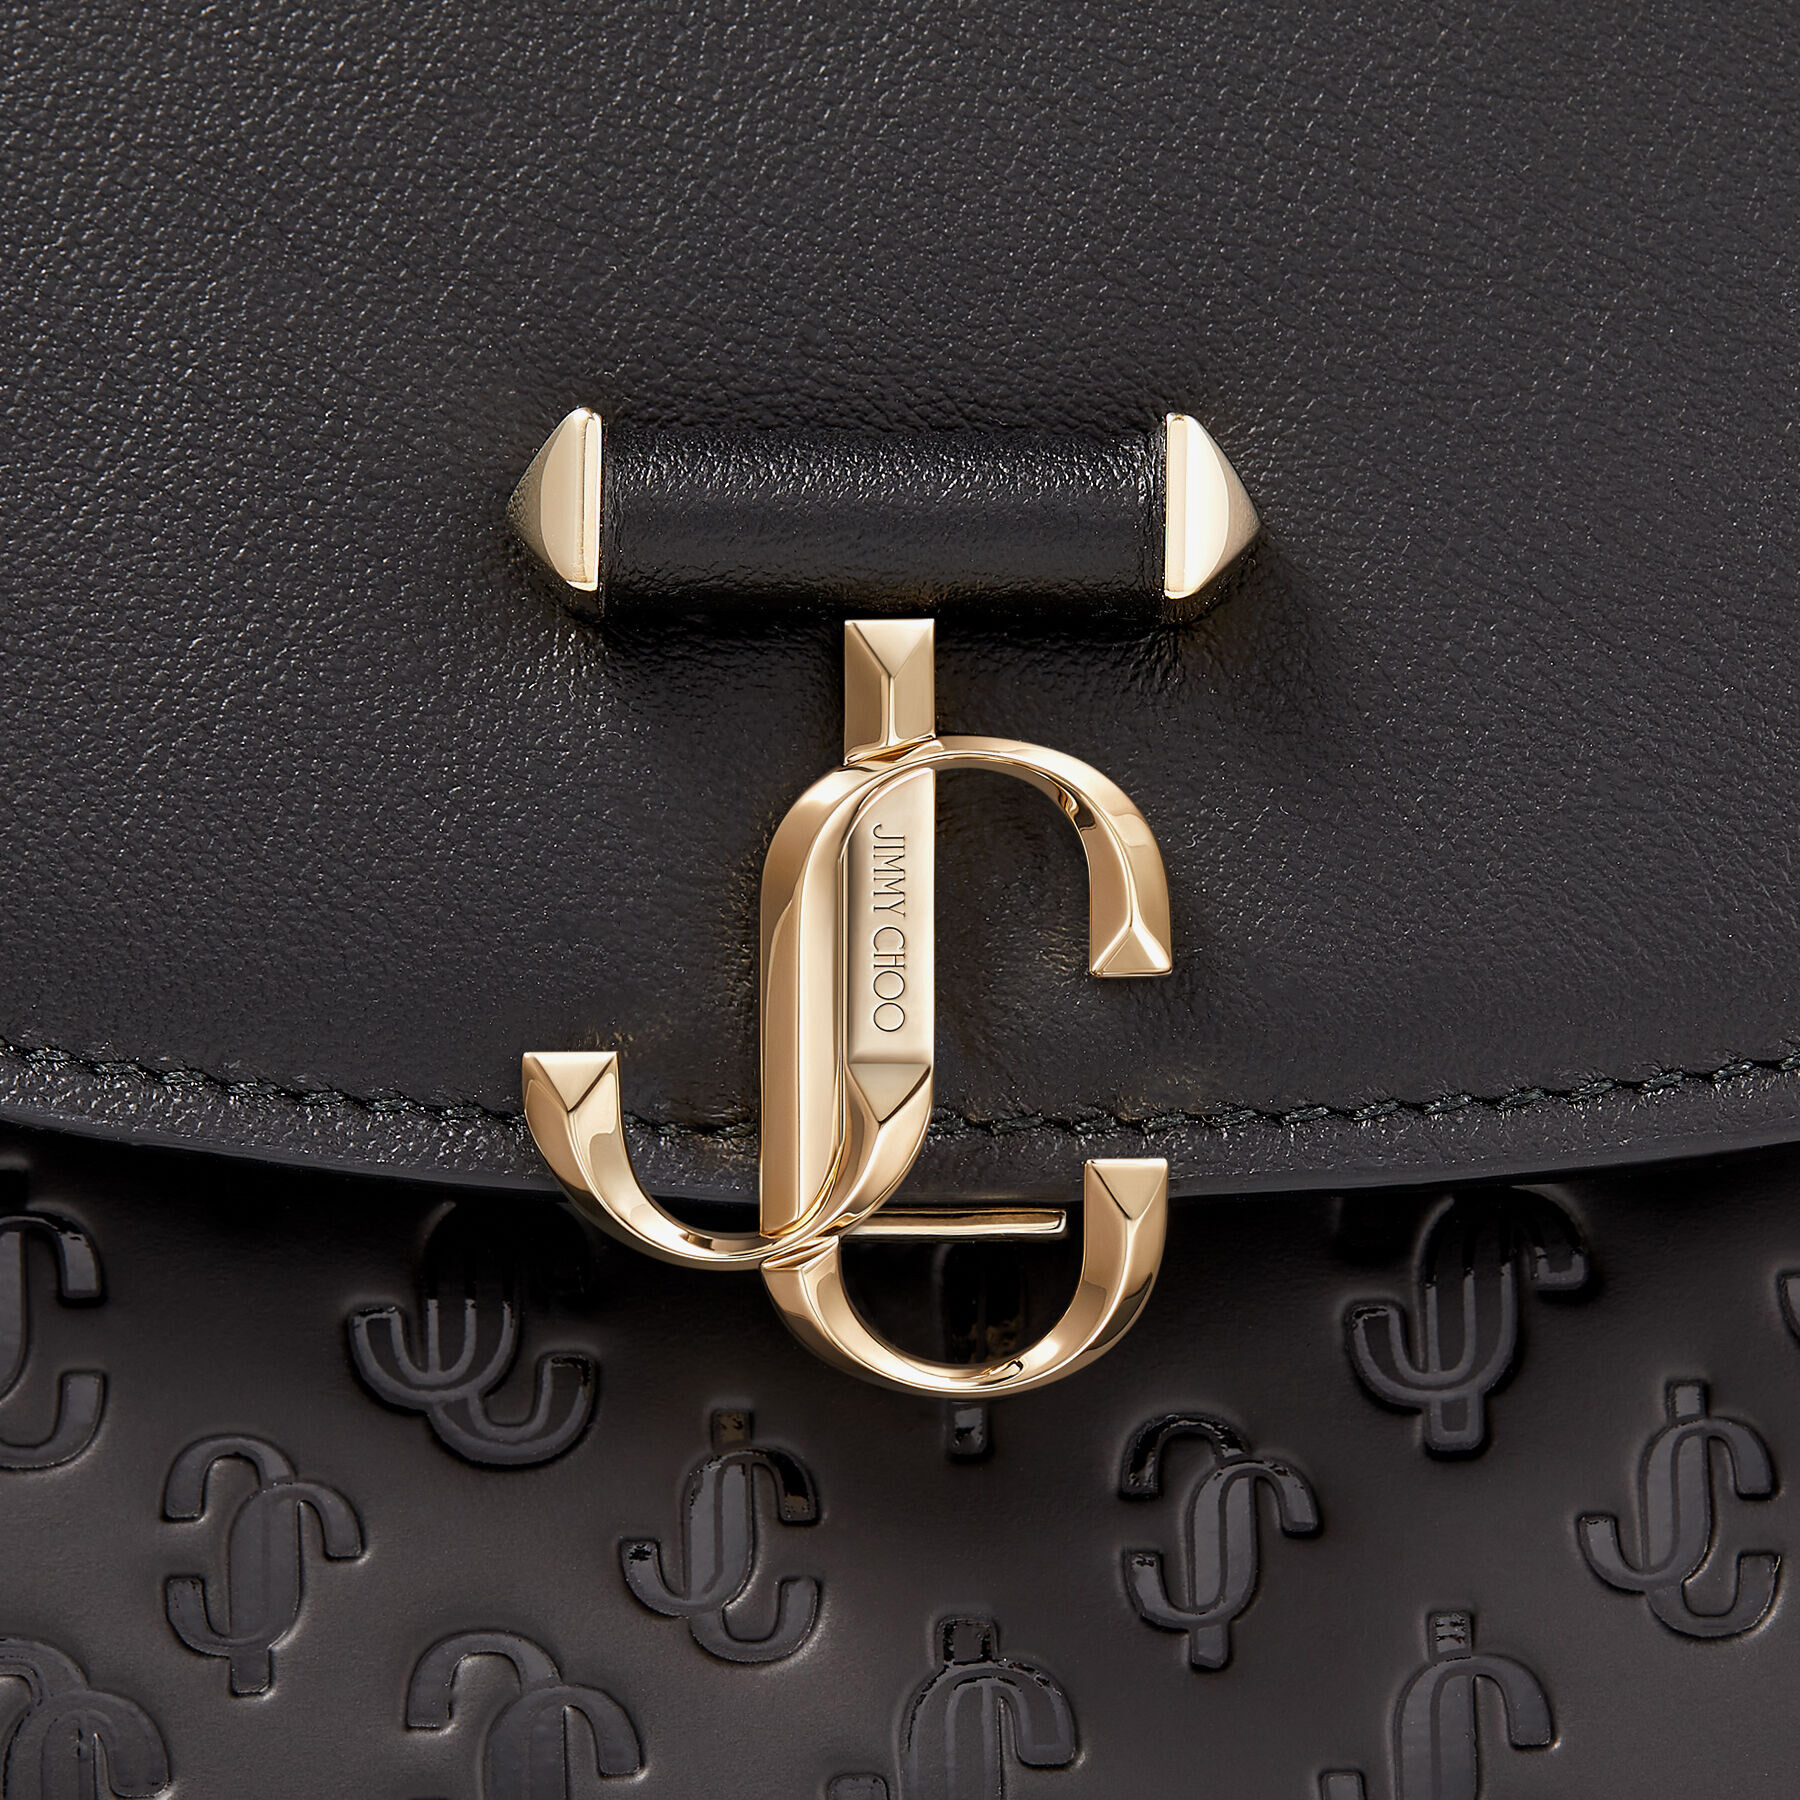 Black JC Monogrammed Leather Pouch with JC Emblem | JC ENVELOPE POUCH ...